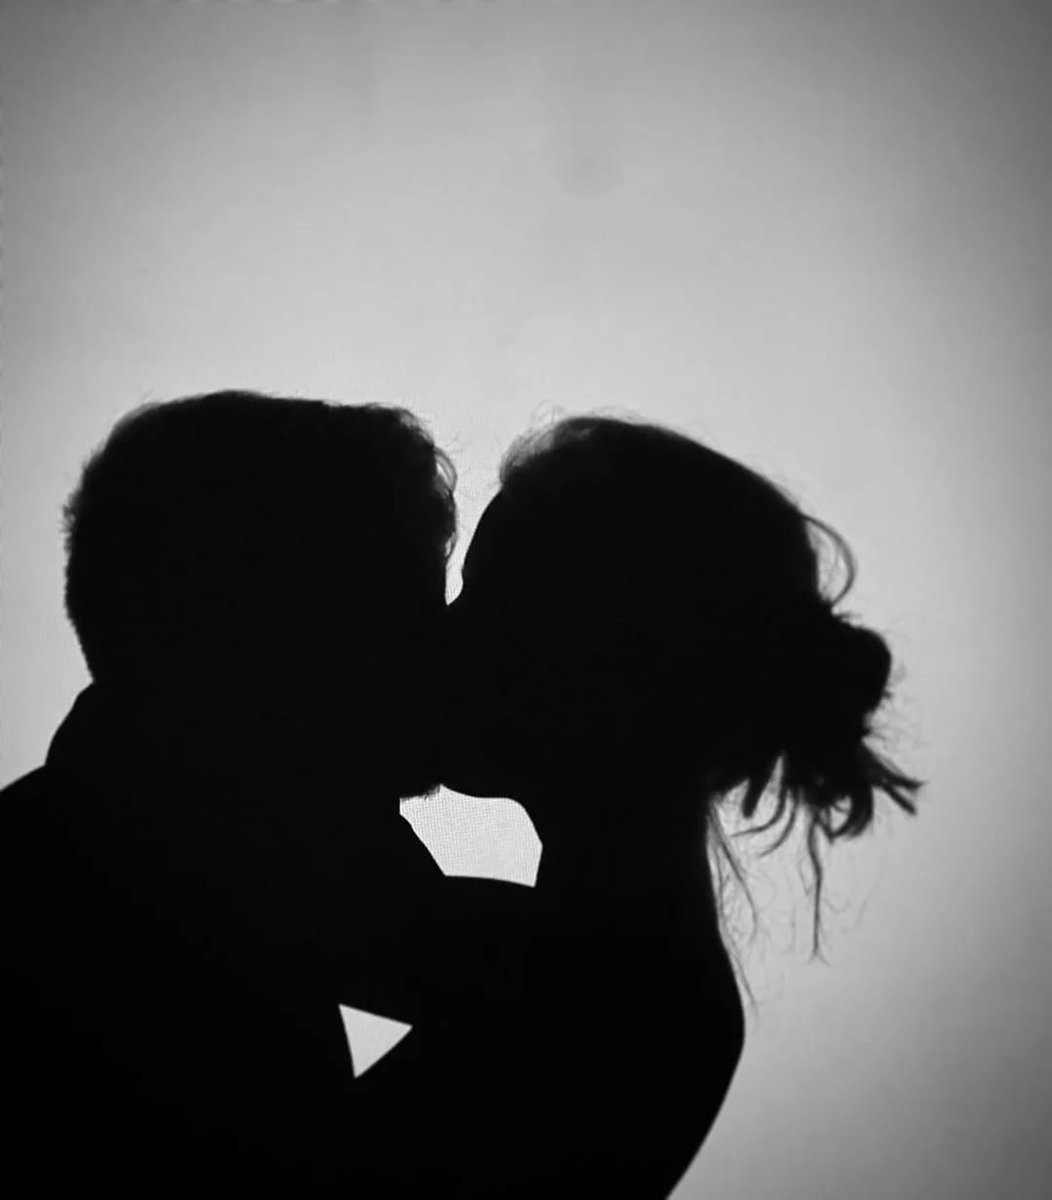 поцелуй 1 - поцелуи парочки любовь монохром - оригинал